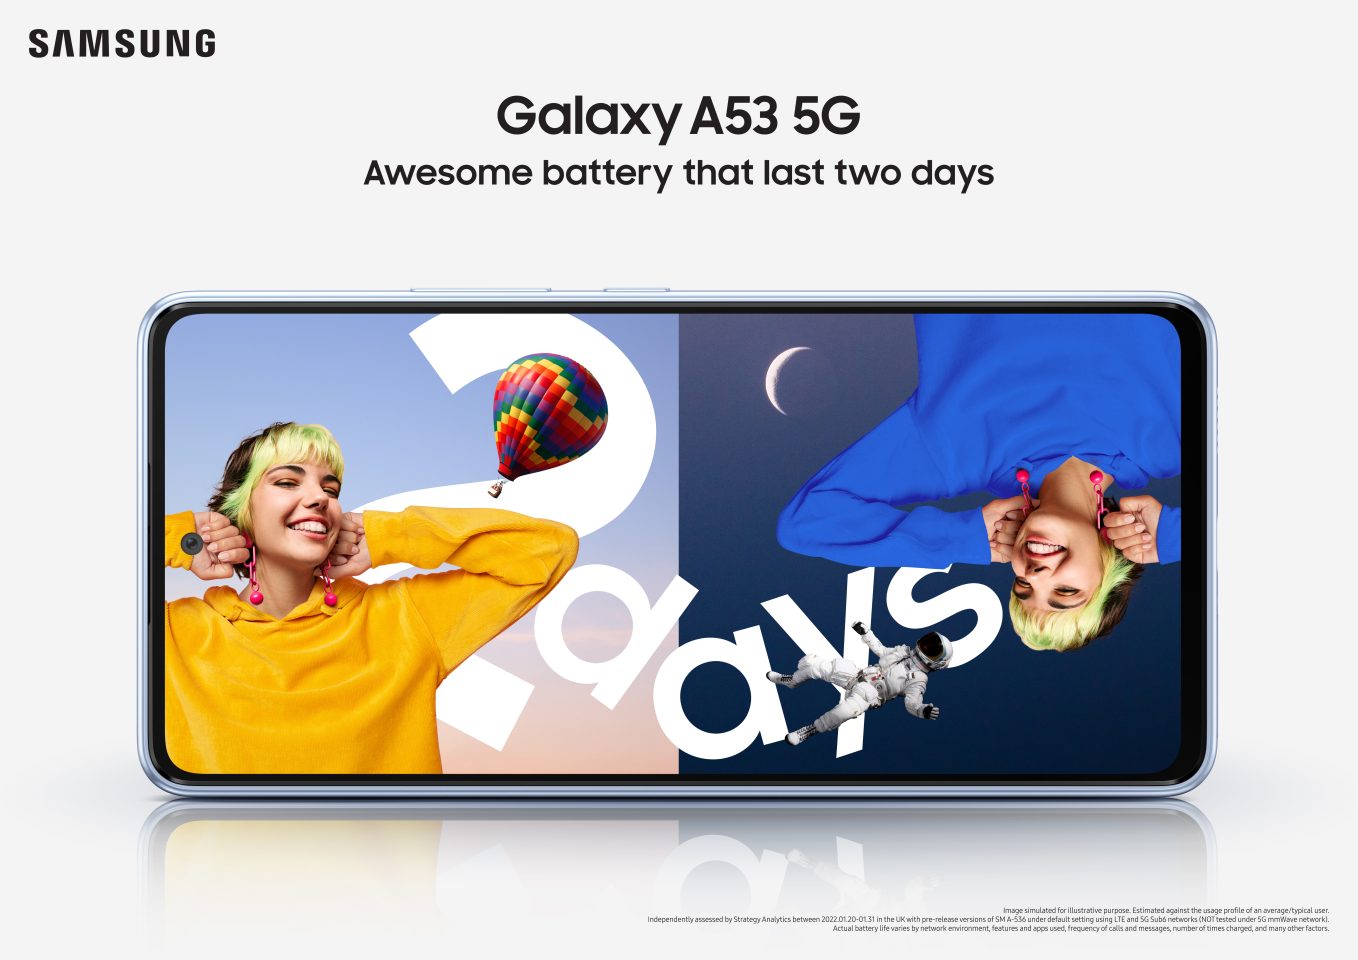 008 Galaxy A53 5G Feature KV Battery 2P 1358x960 1